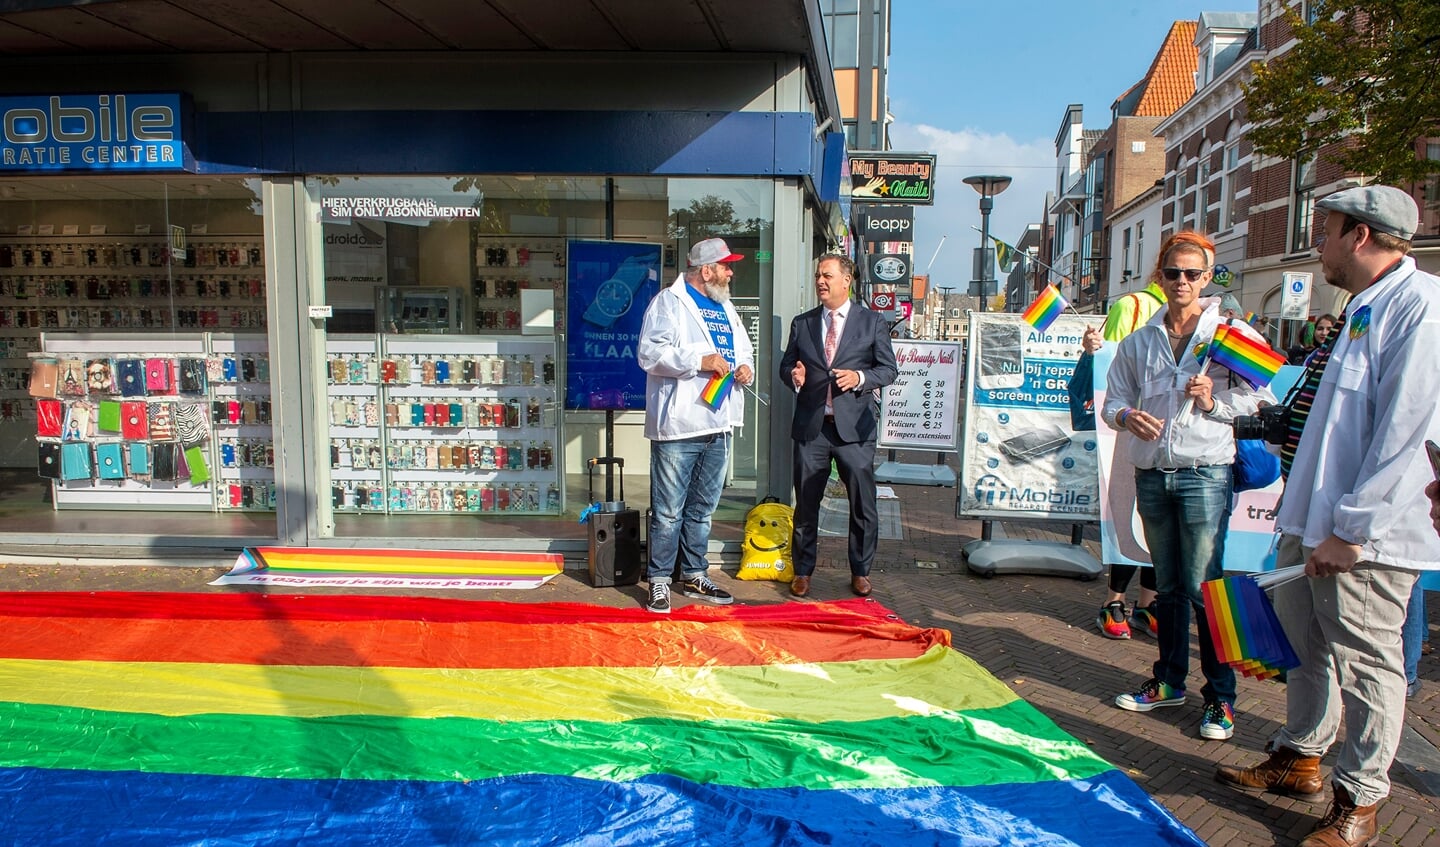 20211010 SA officiele opening regenboogoversteekplaats en Pride Walk 